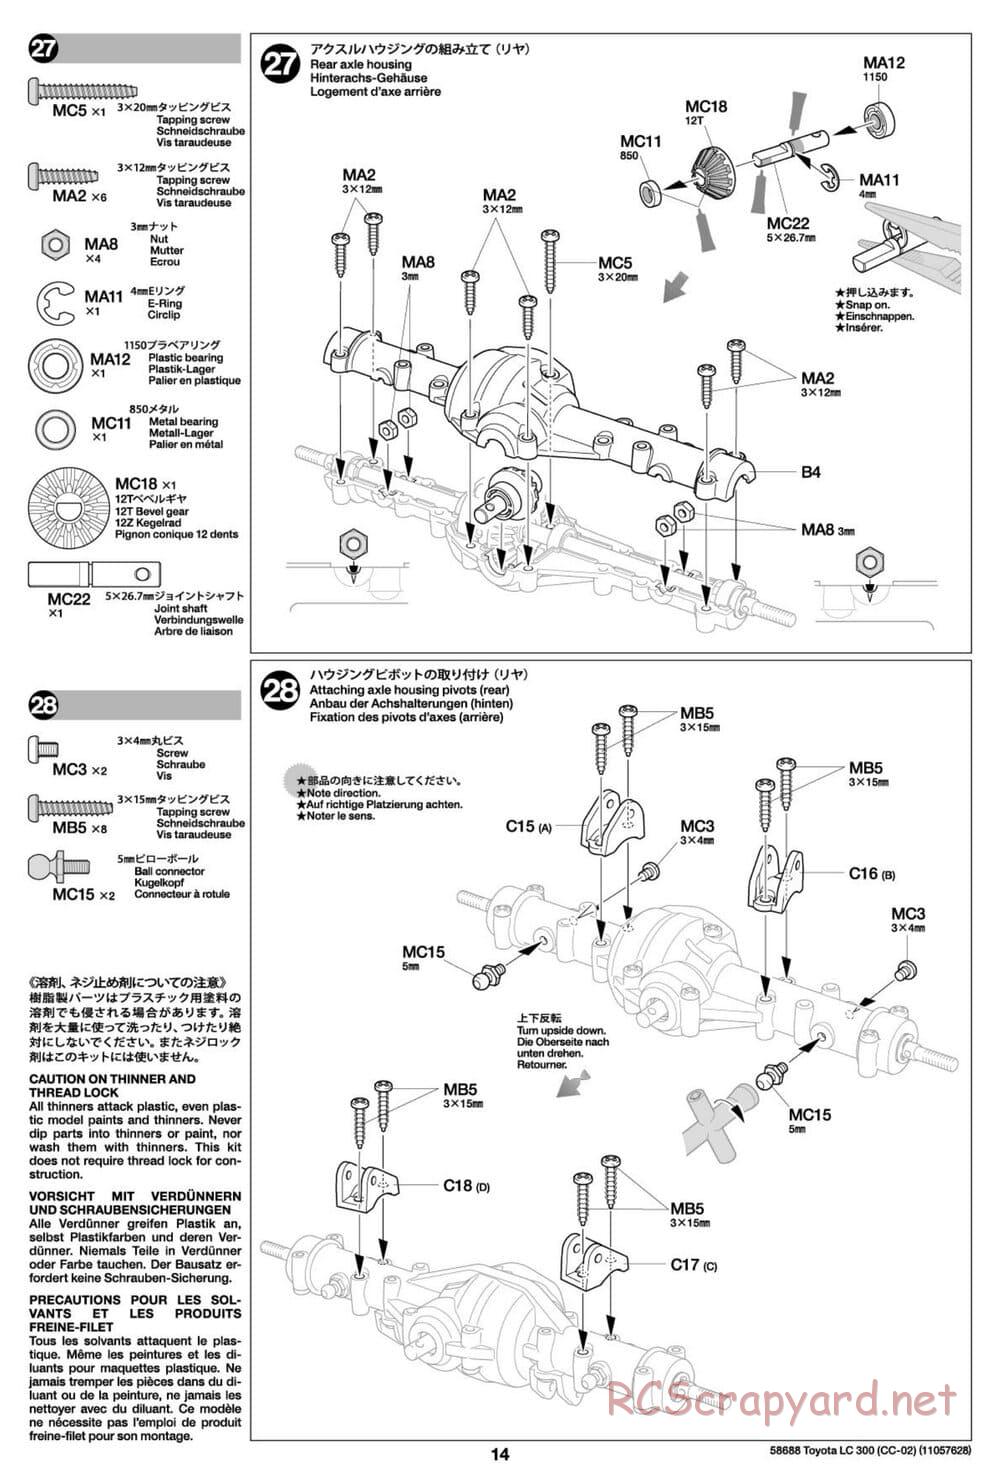 Tamiya - Toyota Land Cruiser 300 - CC-02 Chassis - Manual - Page 14